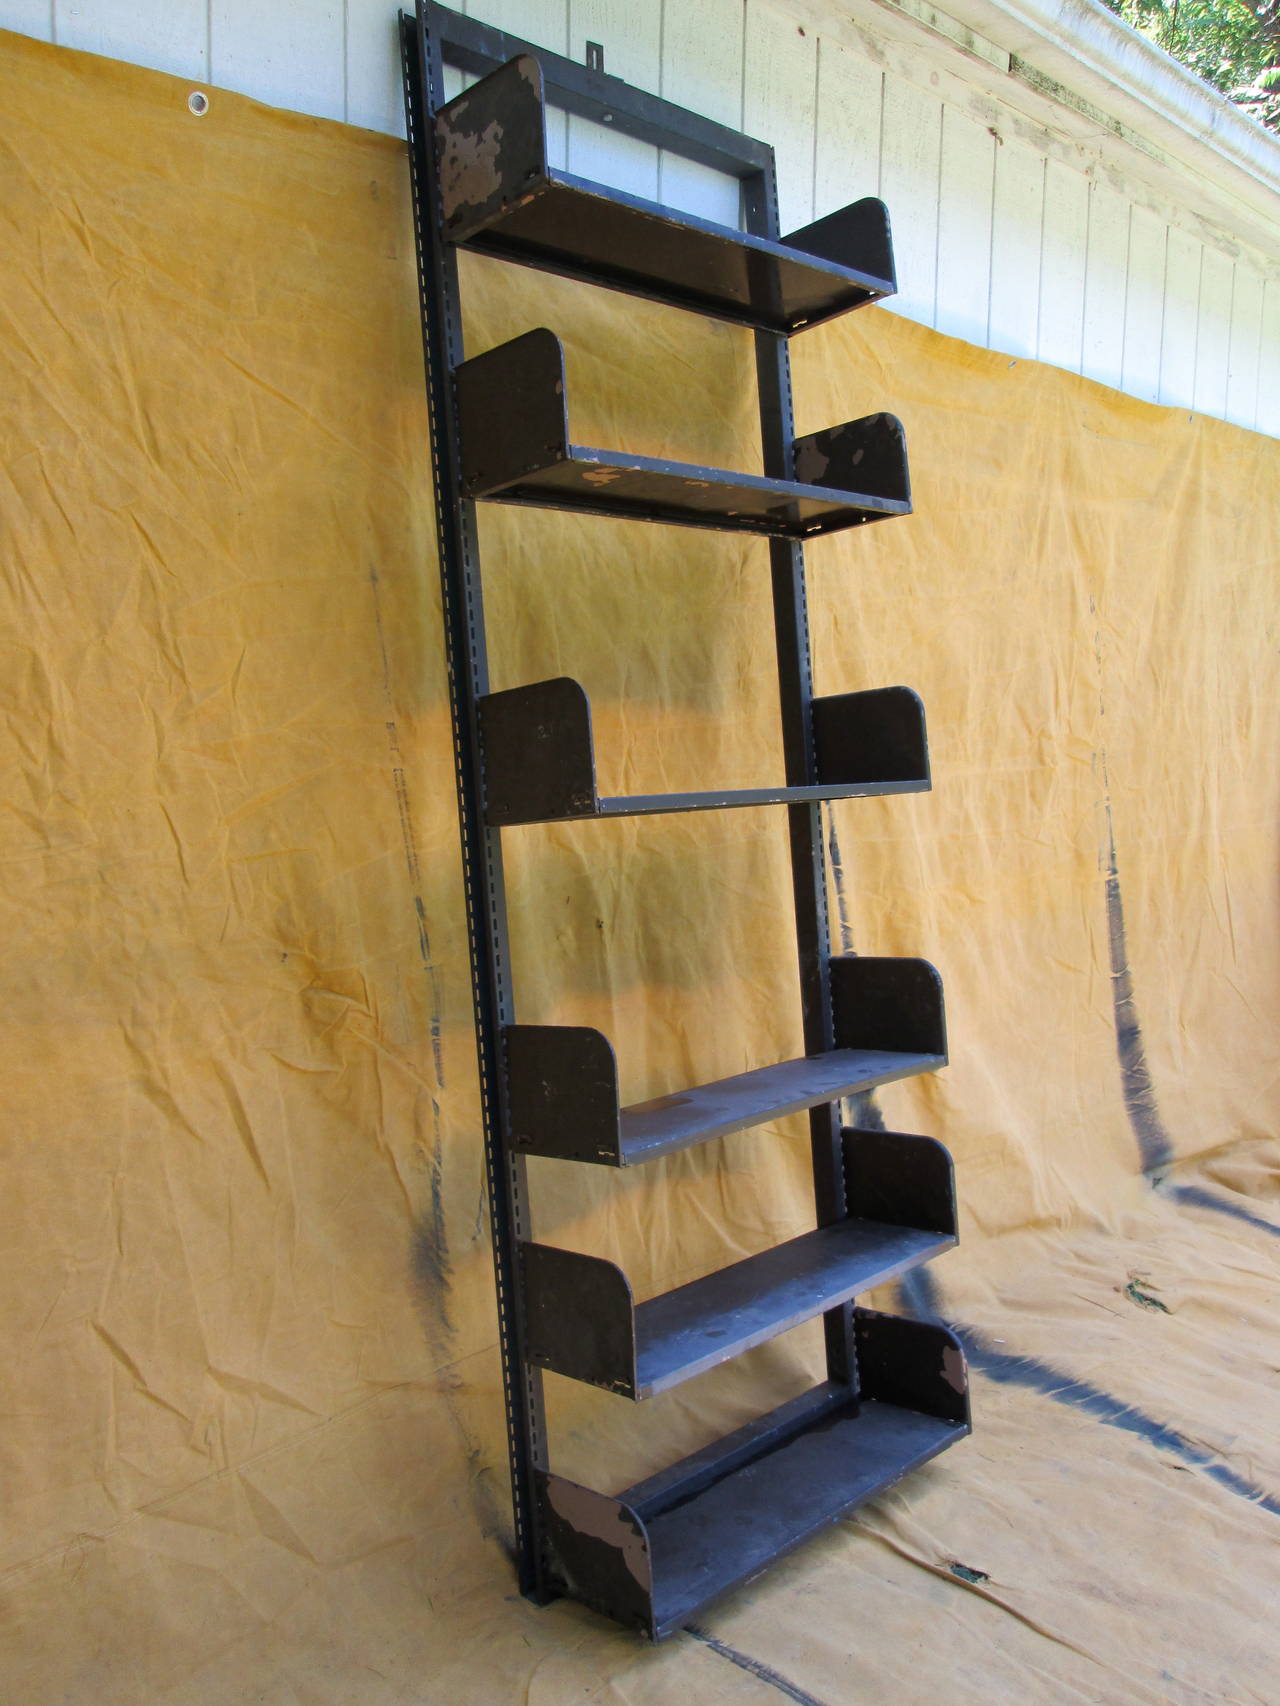 Wall-mount modular bookshelves with easy to adjust shelves. 

